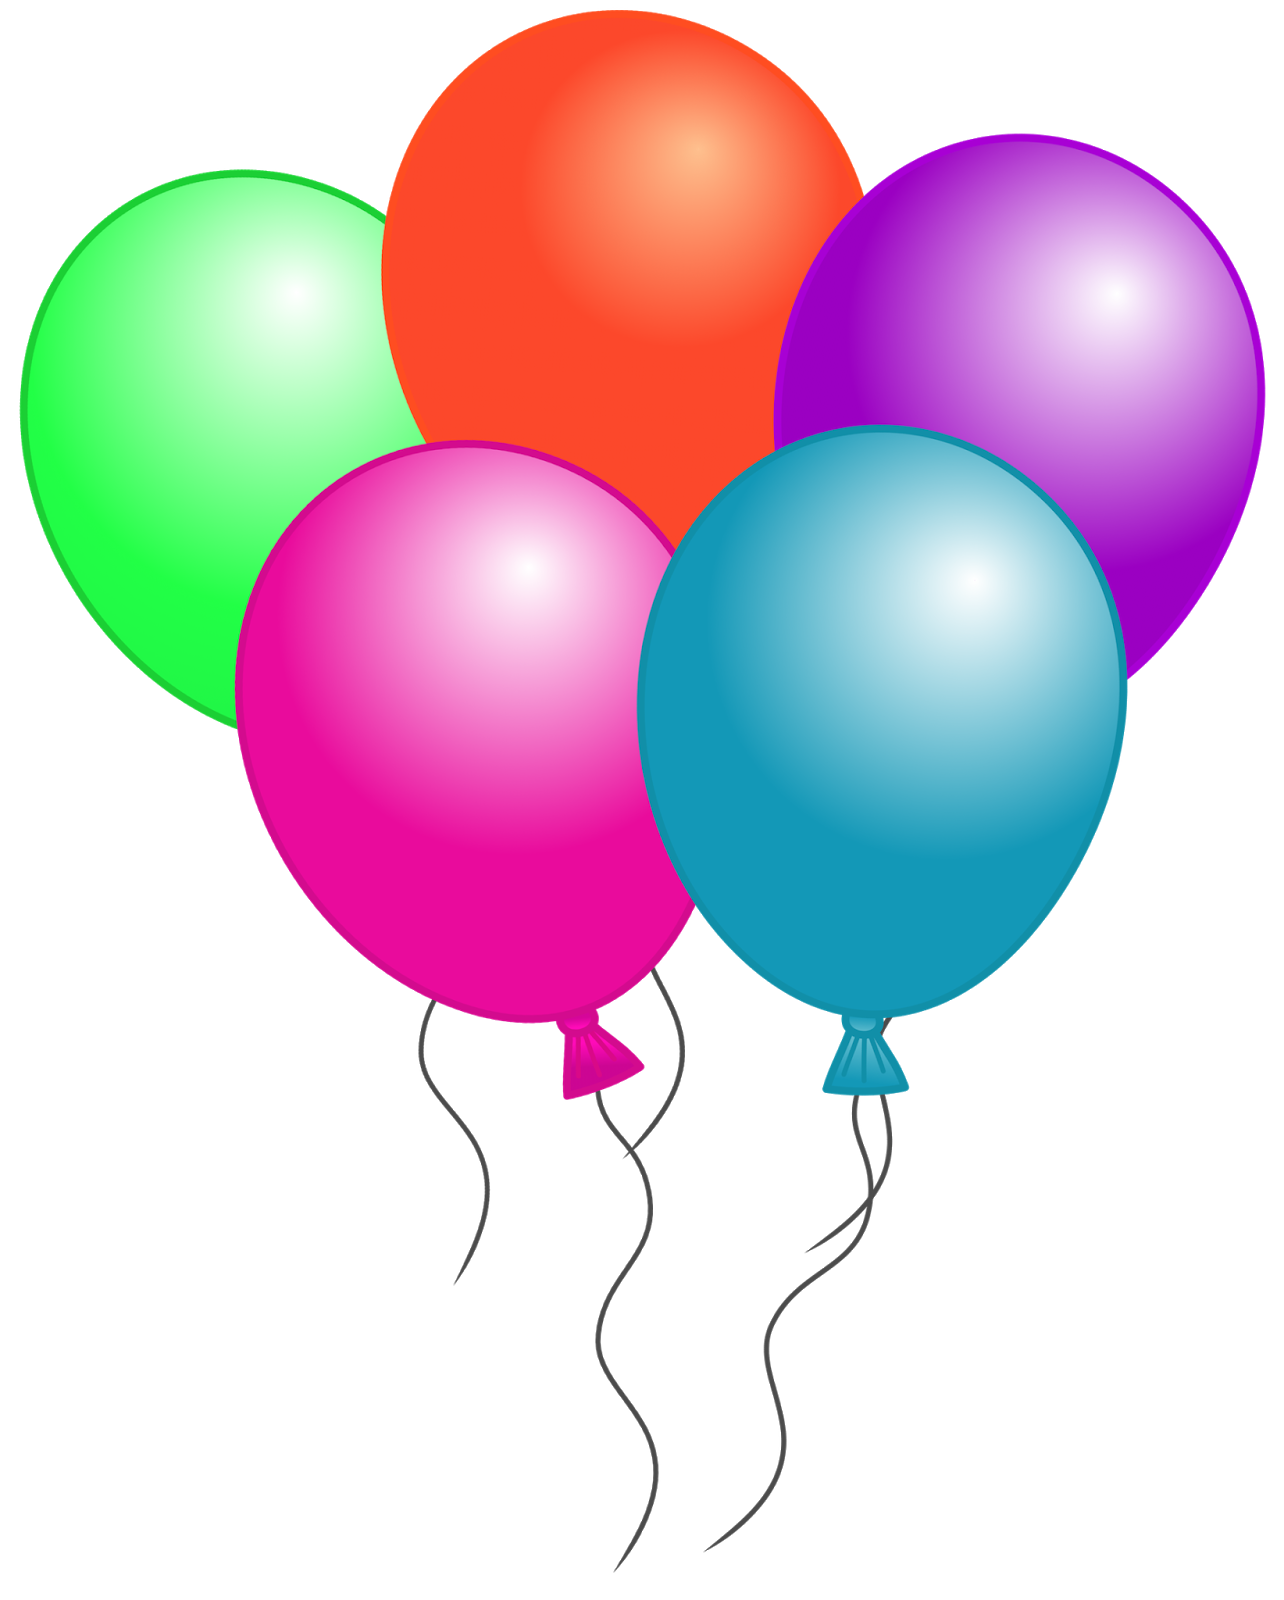 Free Fuschia Balloon Cliparts, Download Free Fuschia Balloon Cliparts